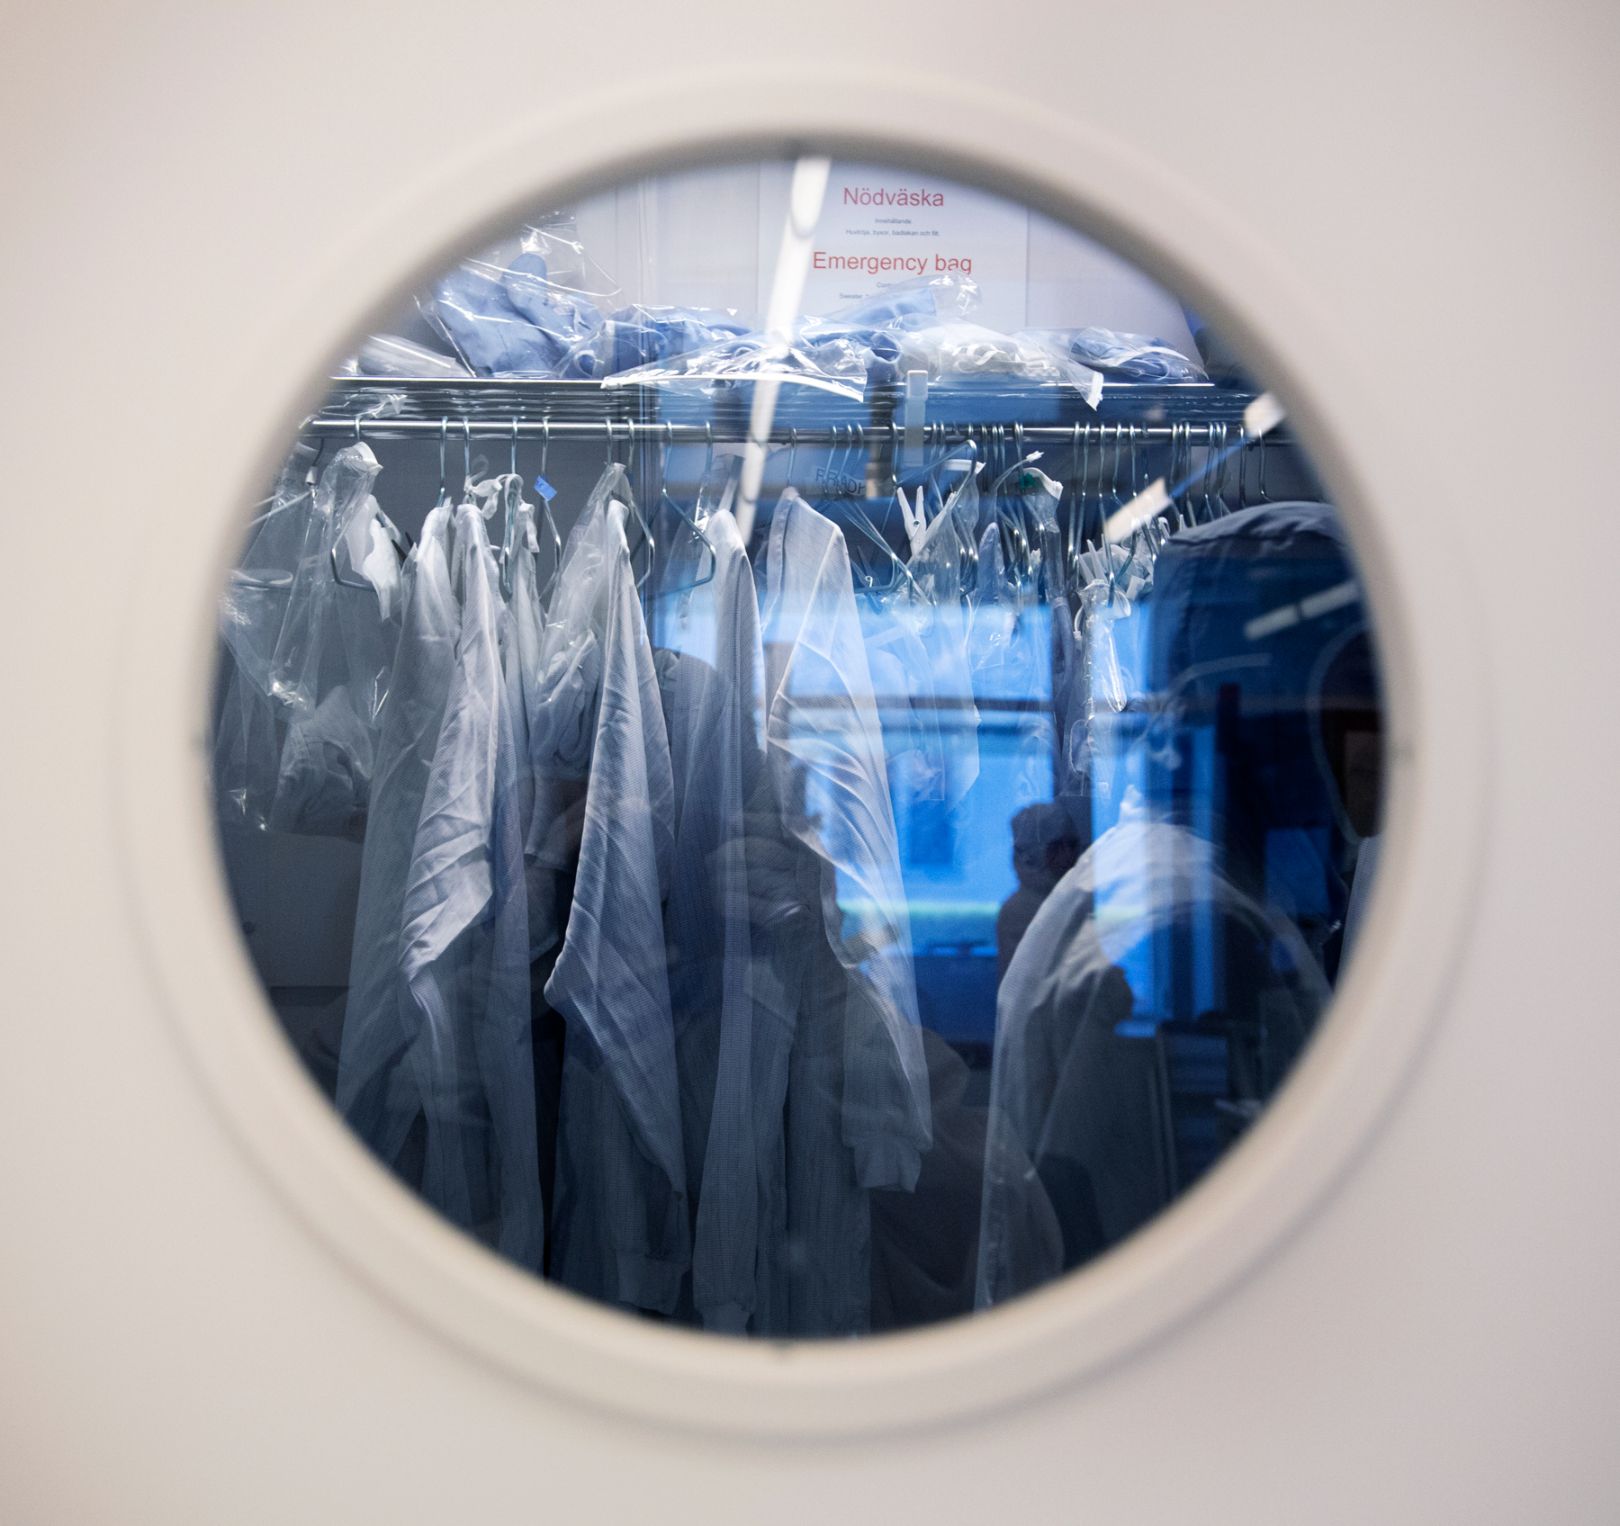 Lab coats seen through a round glass window. Photo by Charlotte Carlberg Bärg.